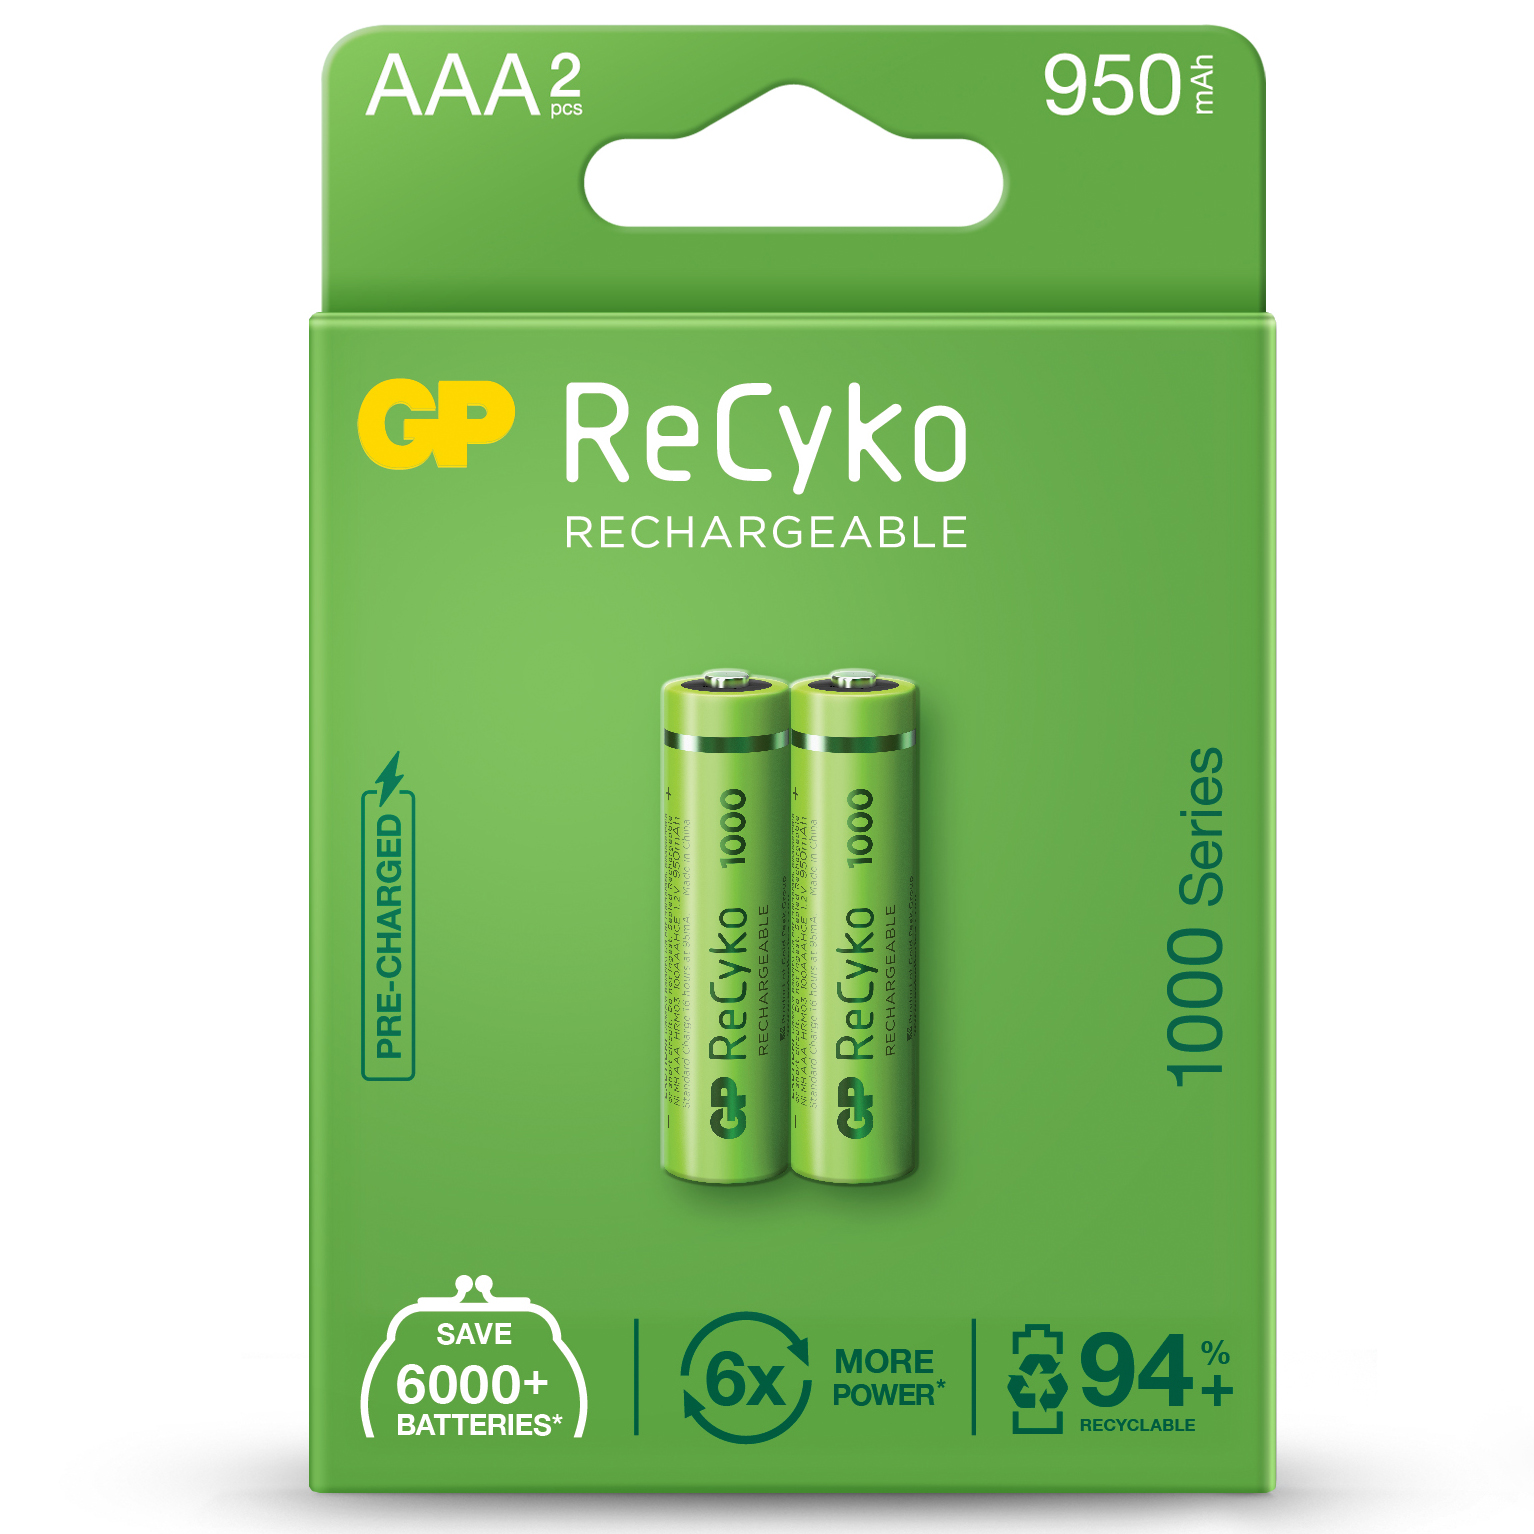 AAA, LR03 ReCyko rechargeable 950mAh - Blister 2un.